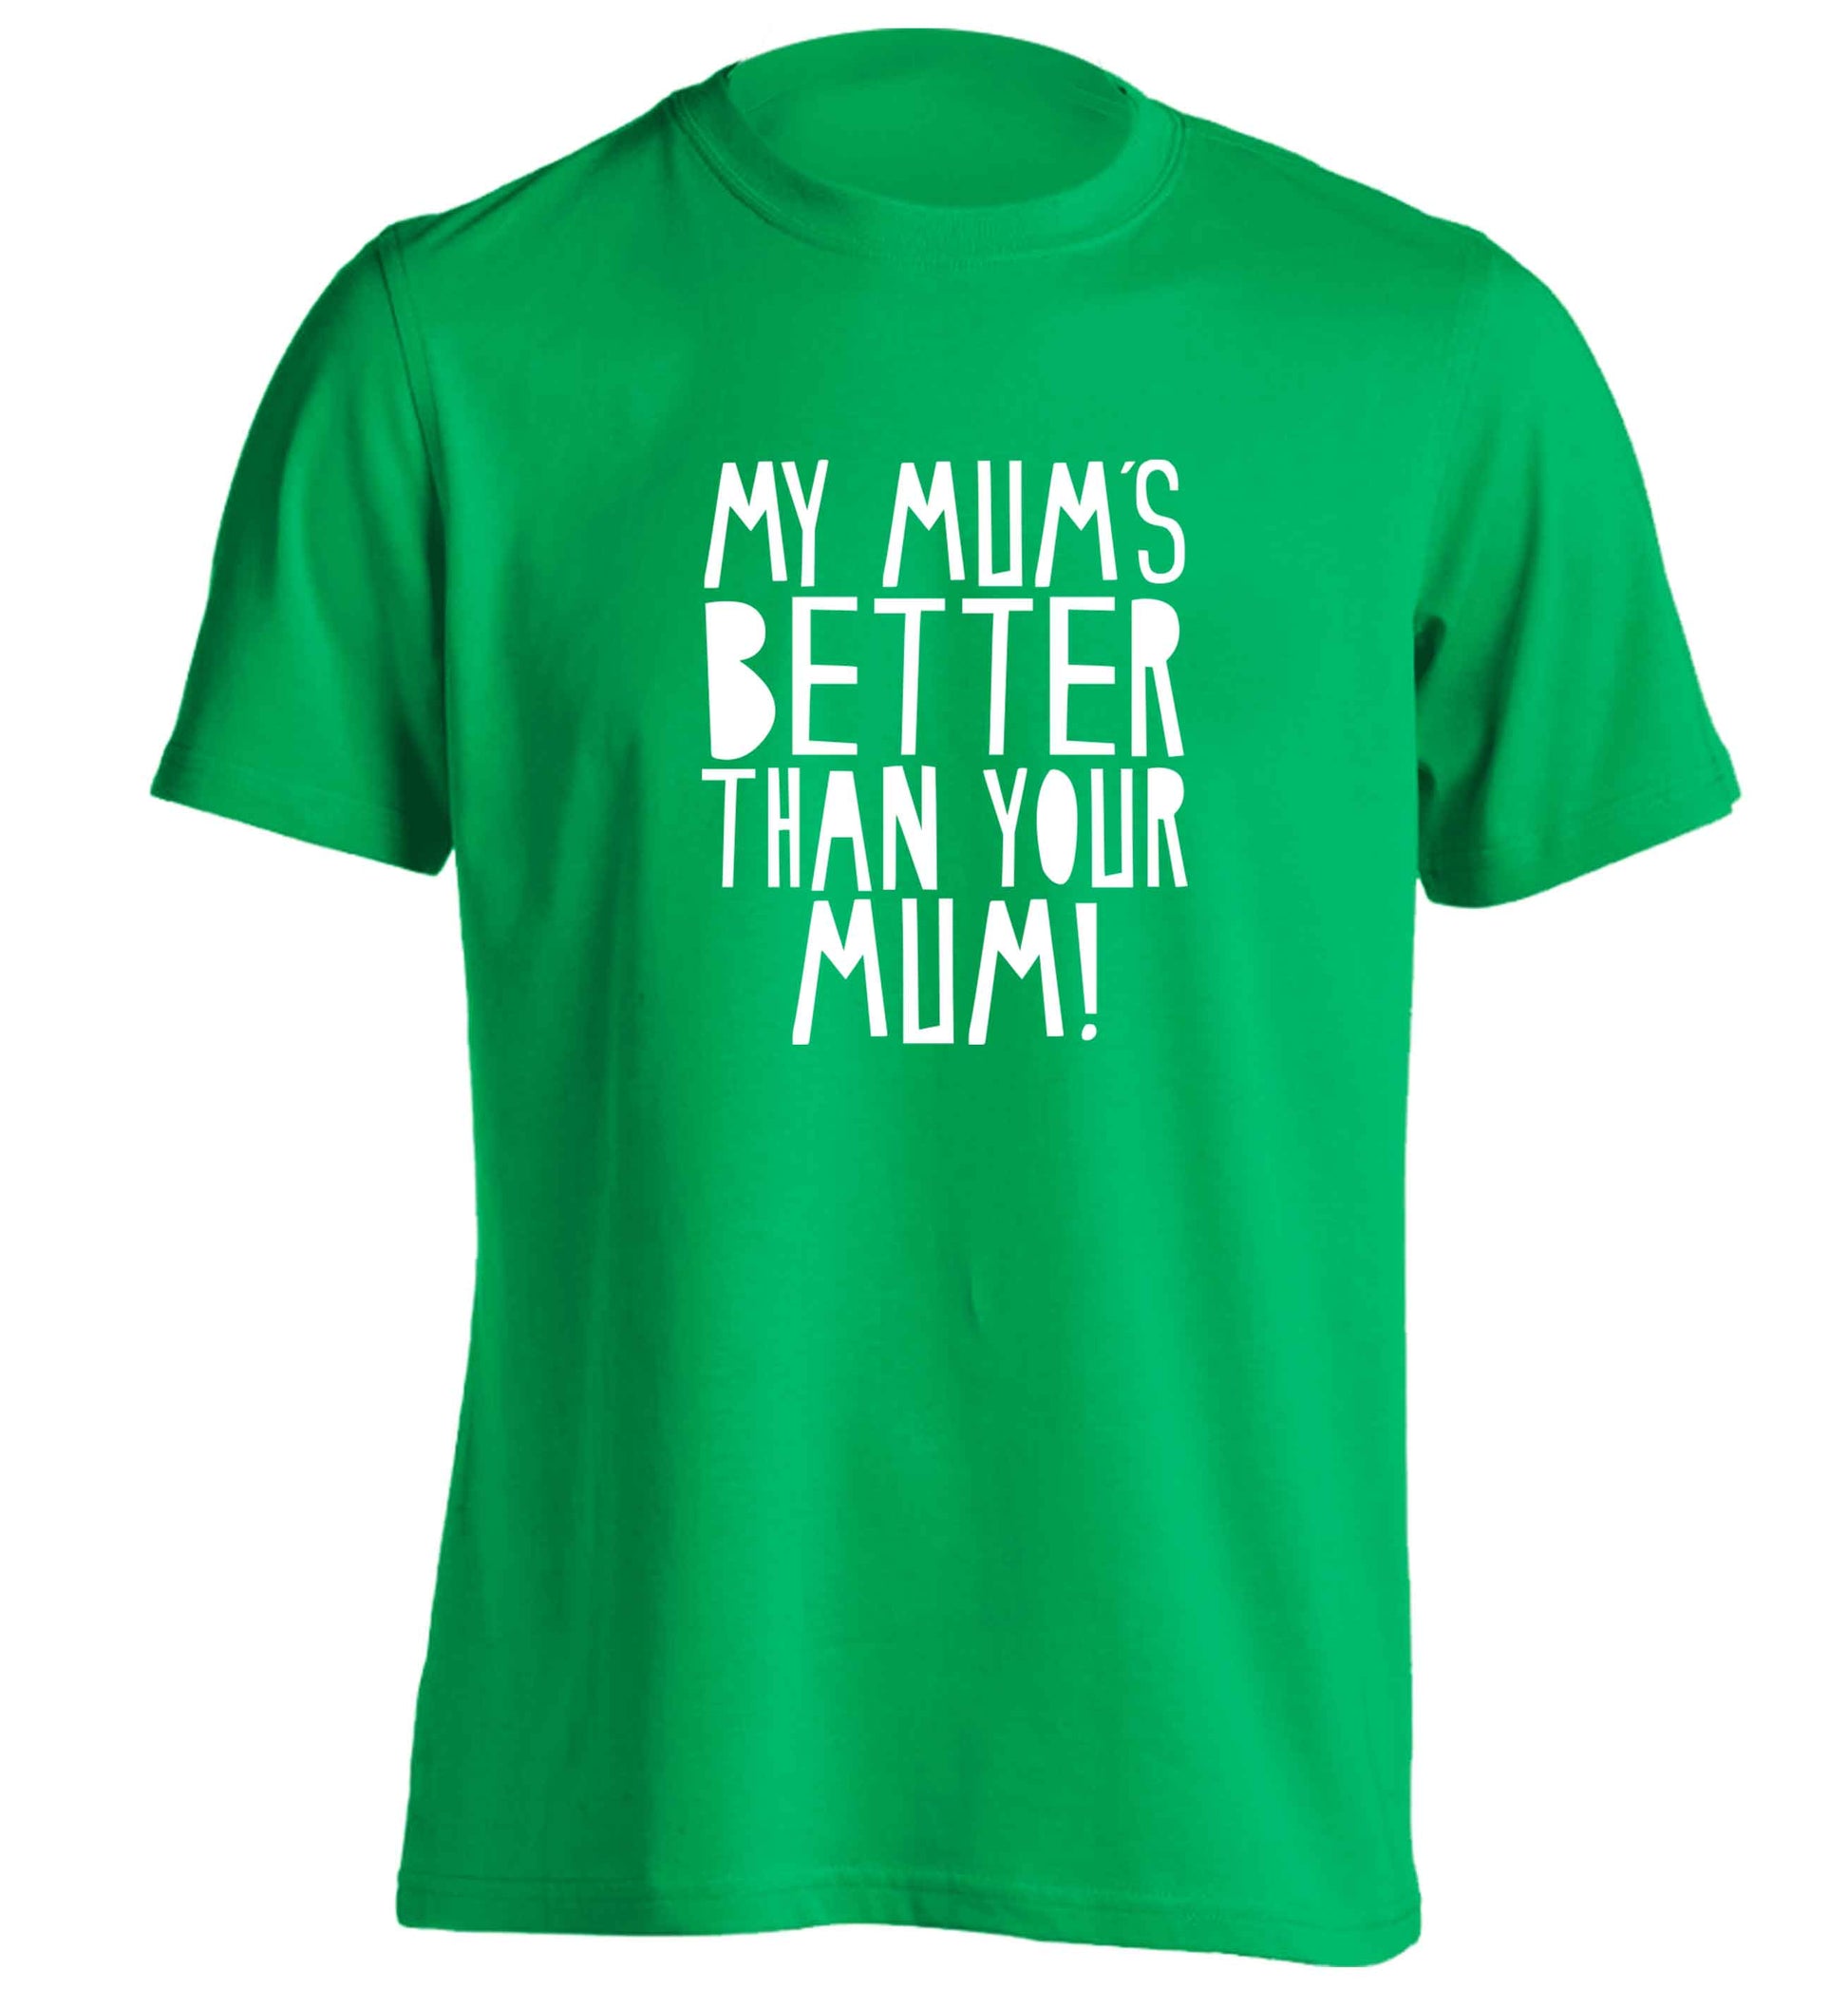 My mum's better than your mum adults unisex green Tshirt 2XL